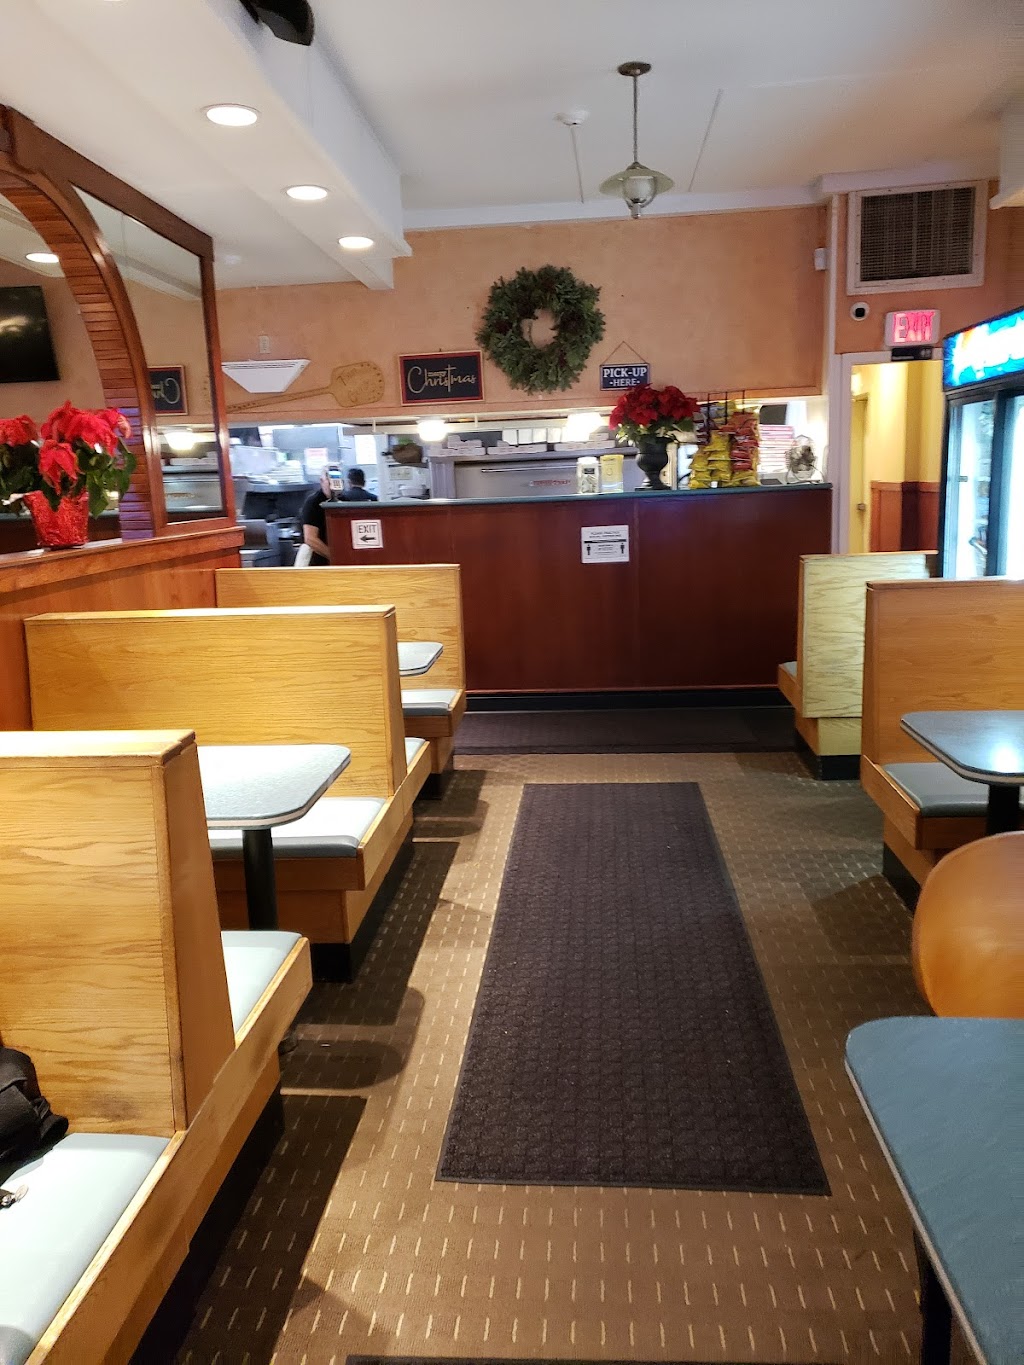 Town & Country Pizza Restaurant | 685 Farmington Ave, New Britain, CT 06053 | Phone: (860) 223-2737